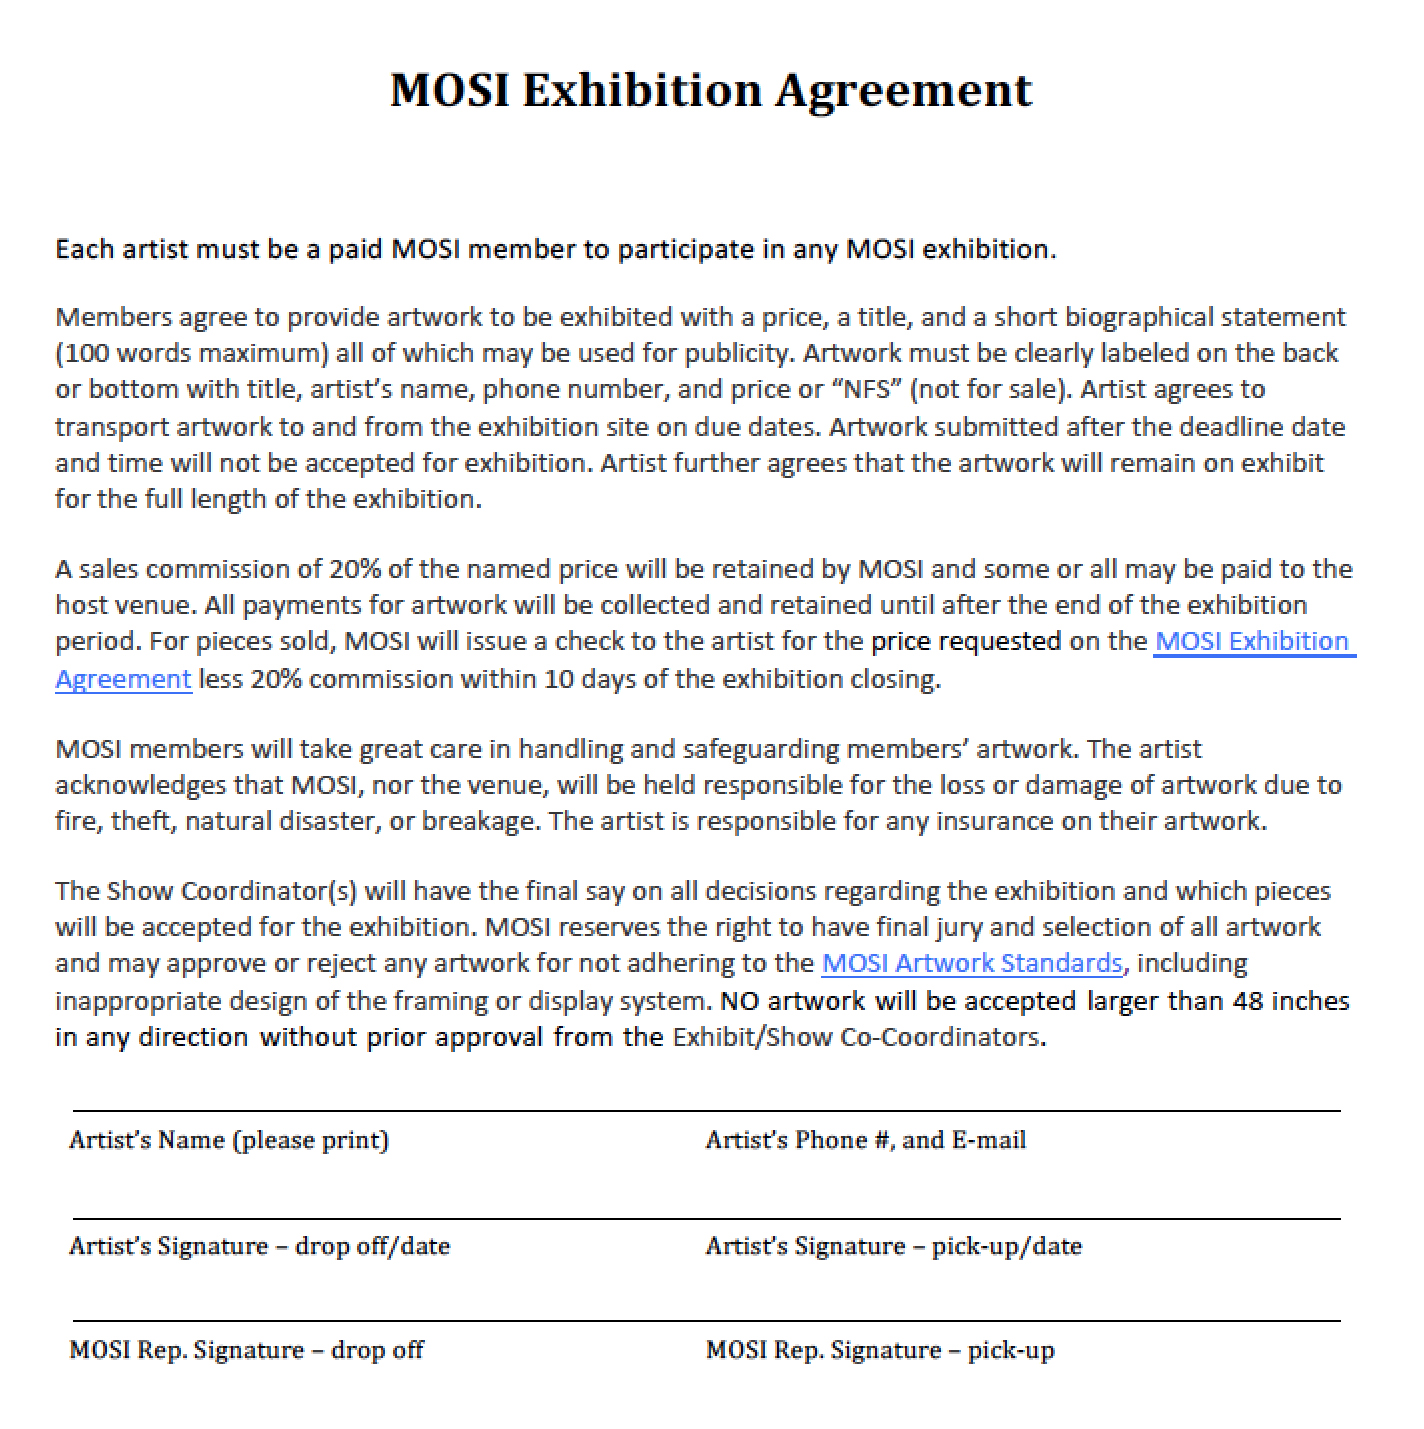 mosi-exhibition-agreement